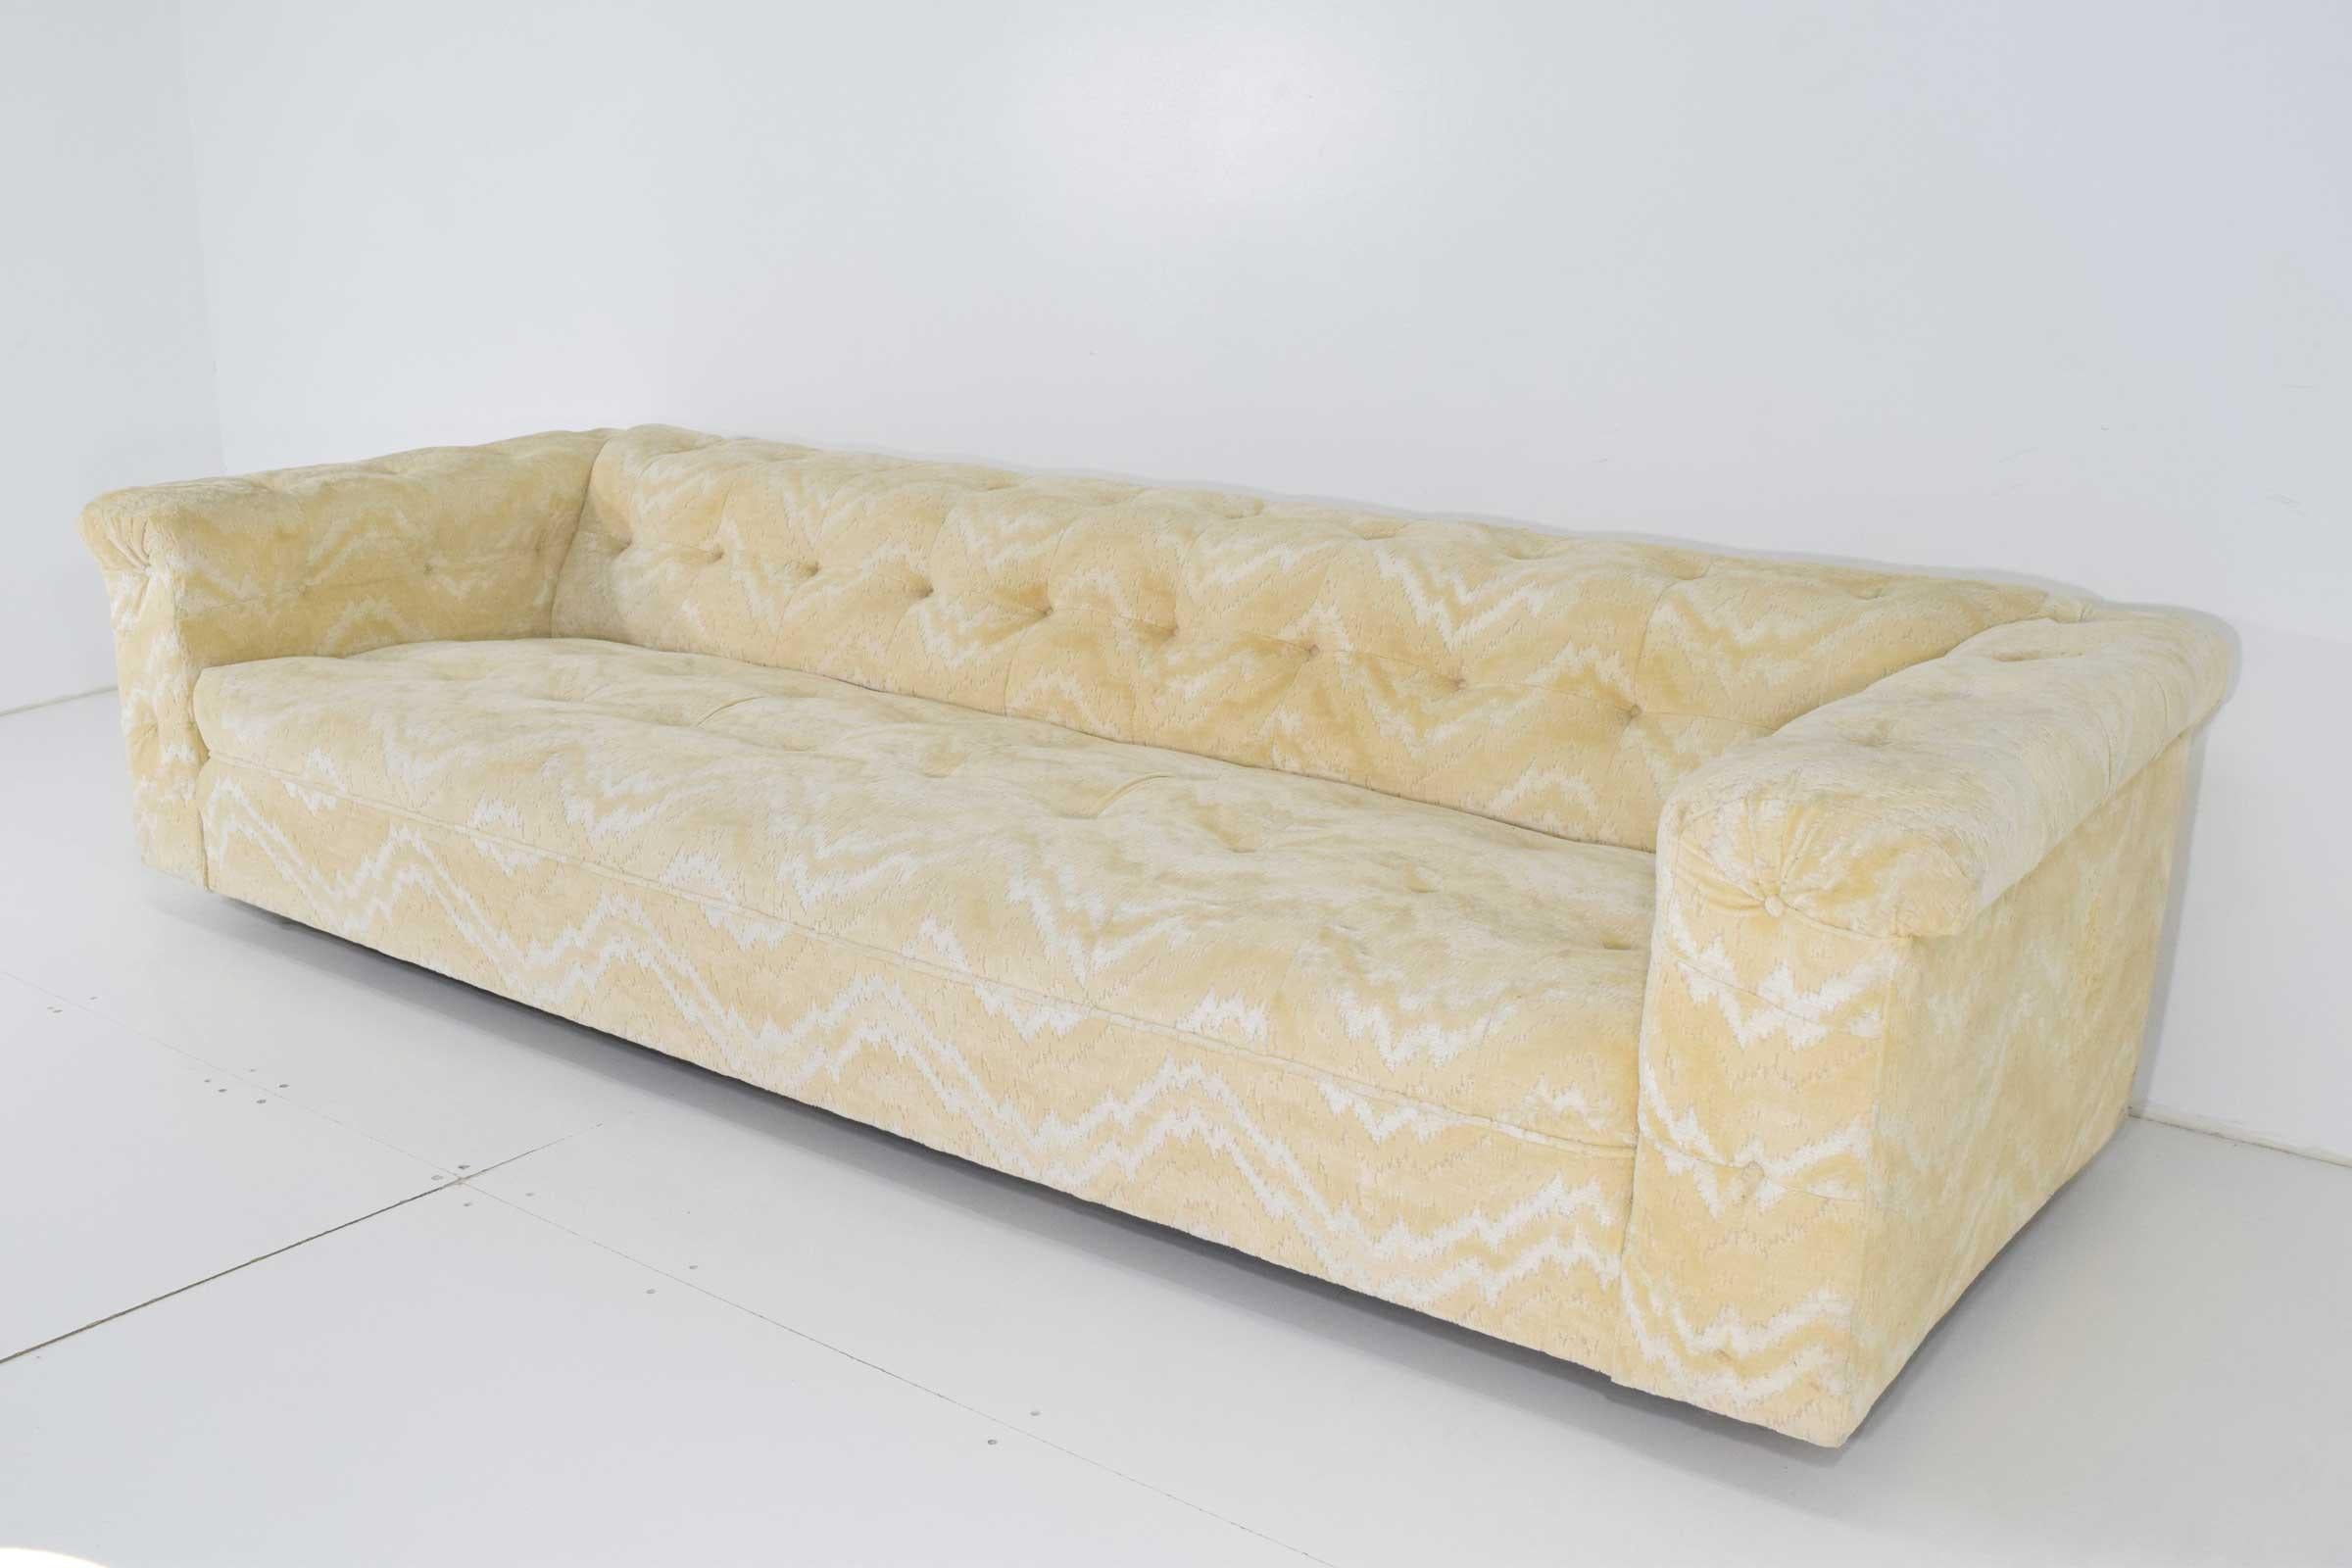 20th Century Edward Wormley for Dunbar Party Sofa Model 5407, Pair Available